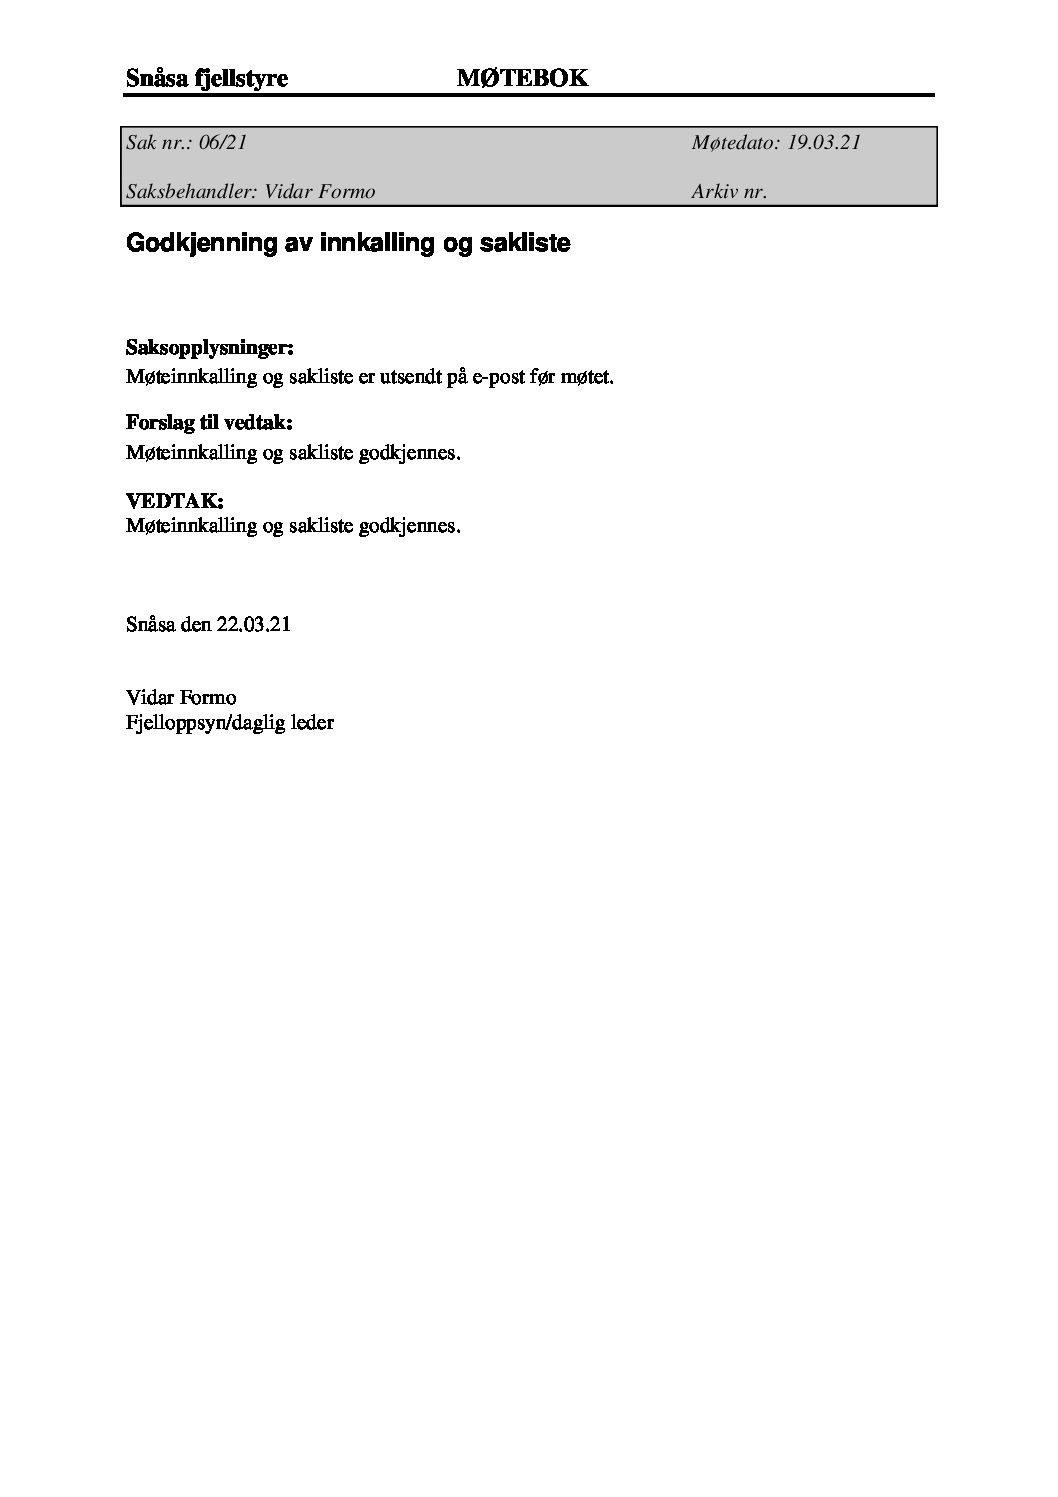 motereferat-snasa-fjellstyre-29-03-2021-pdf.jpg